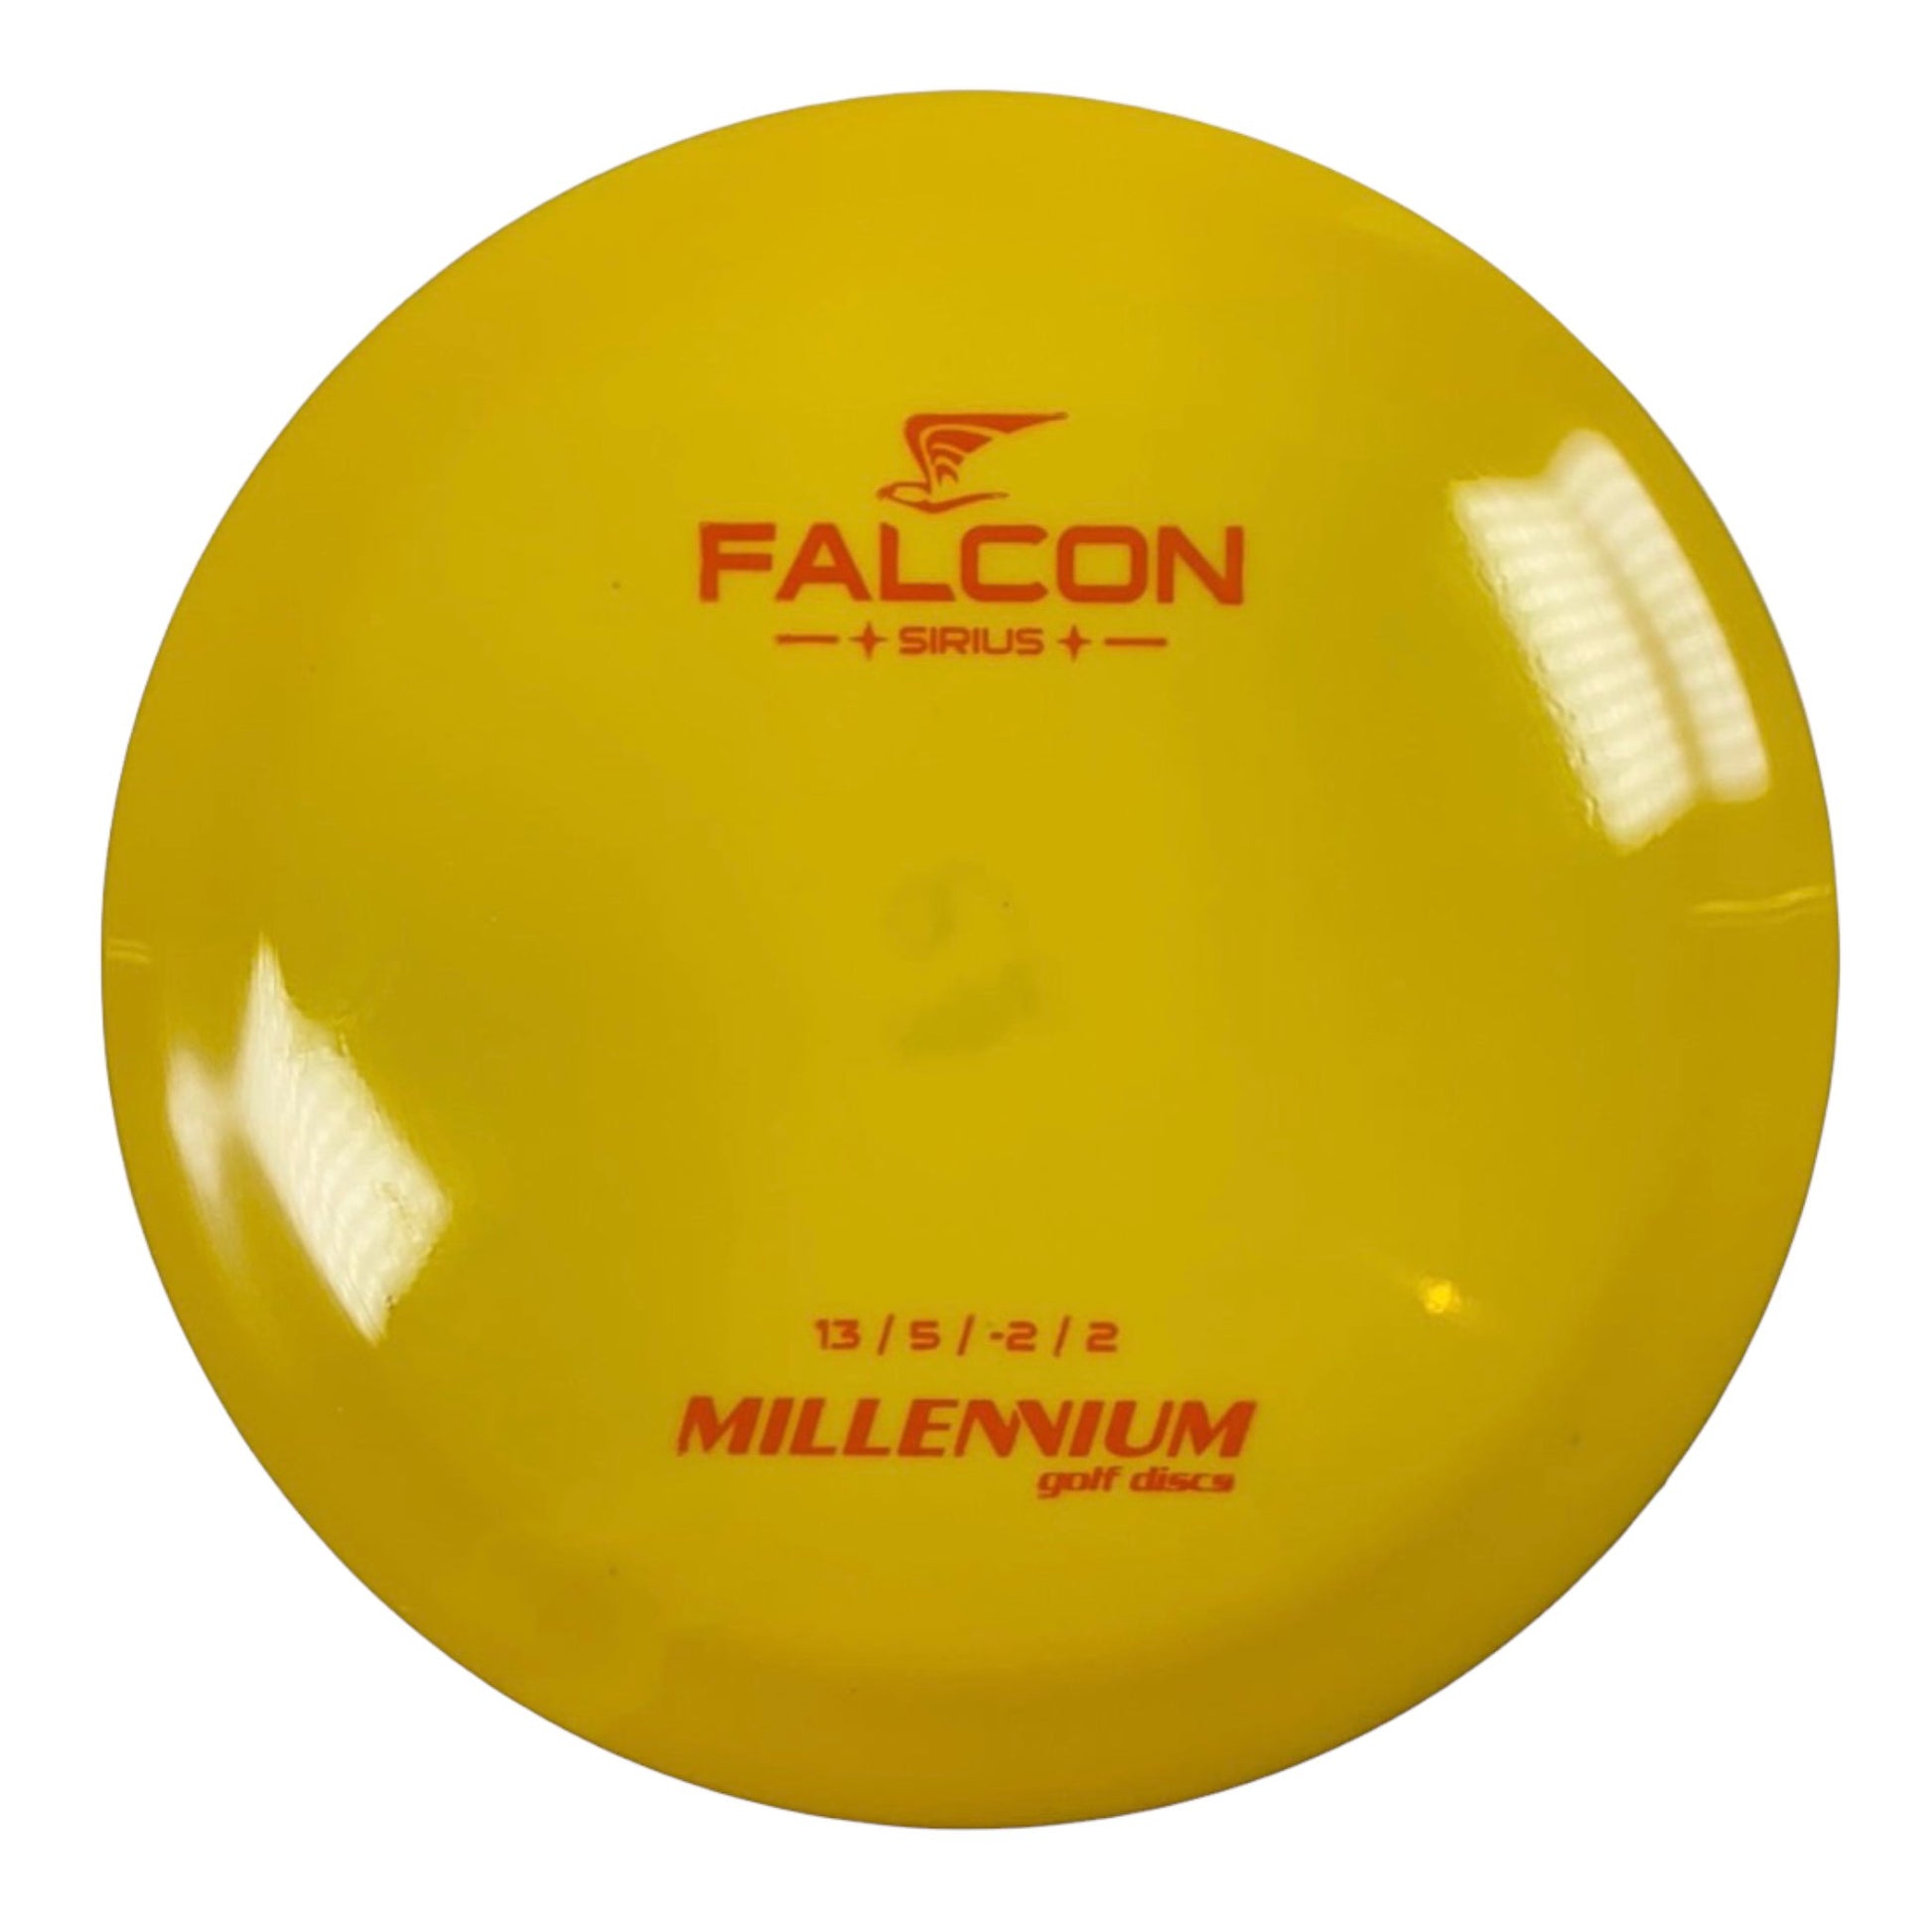 Millennium Golf Discs Falcon | Sirius | Yellow/Orange 170g Disc Golf